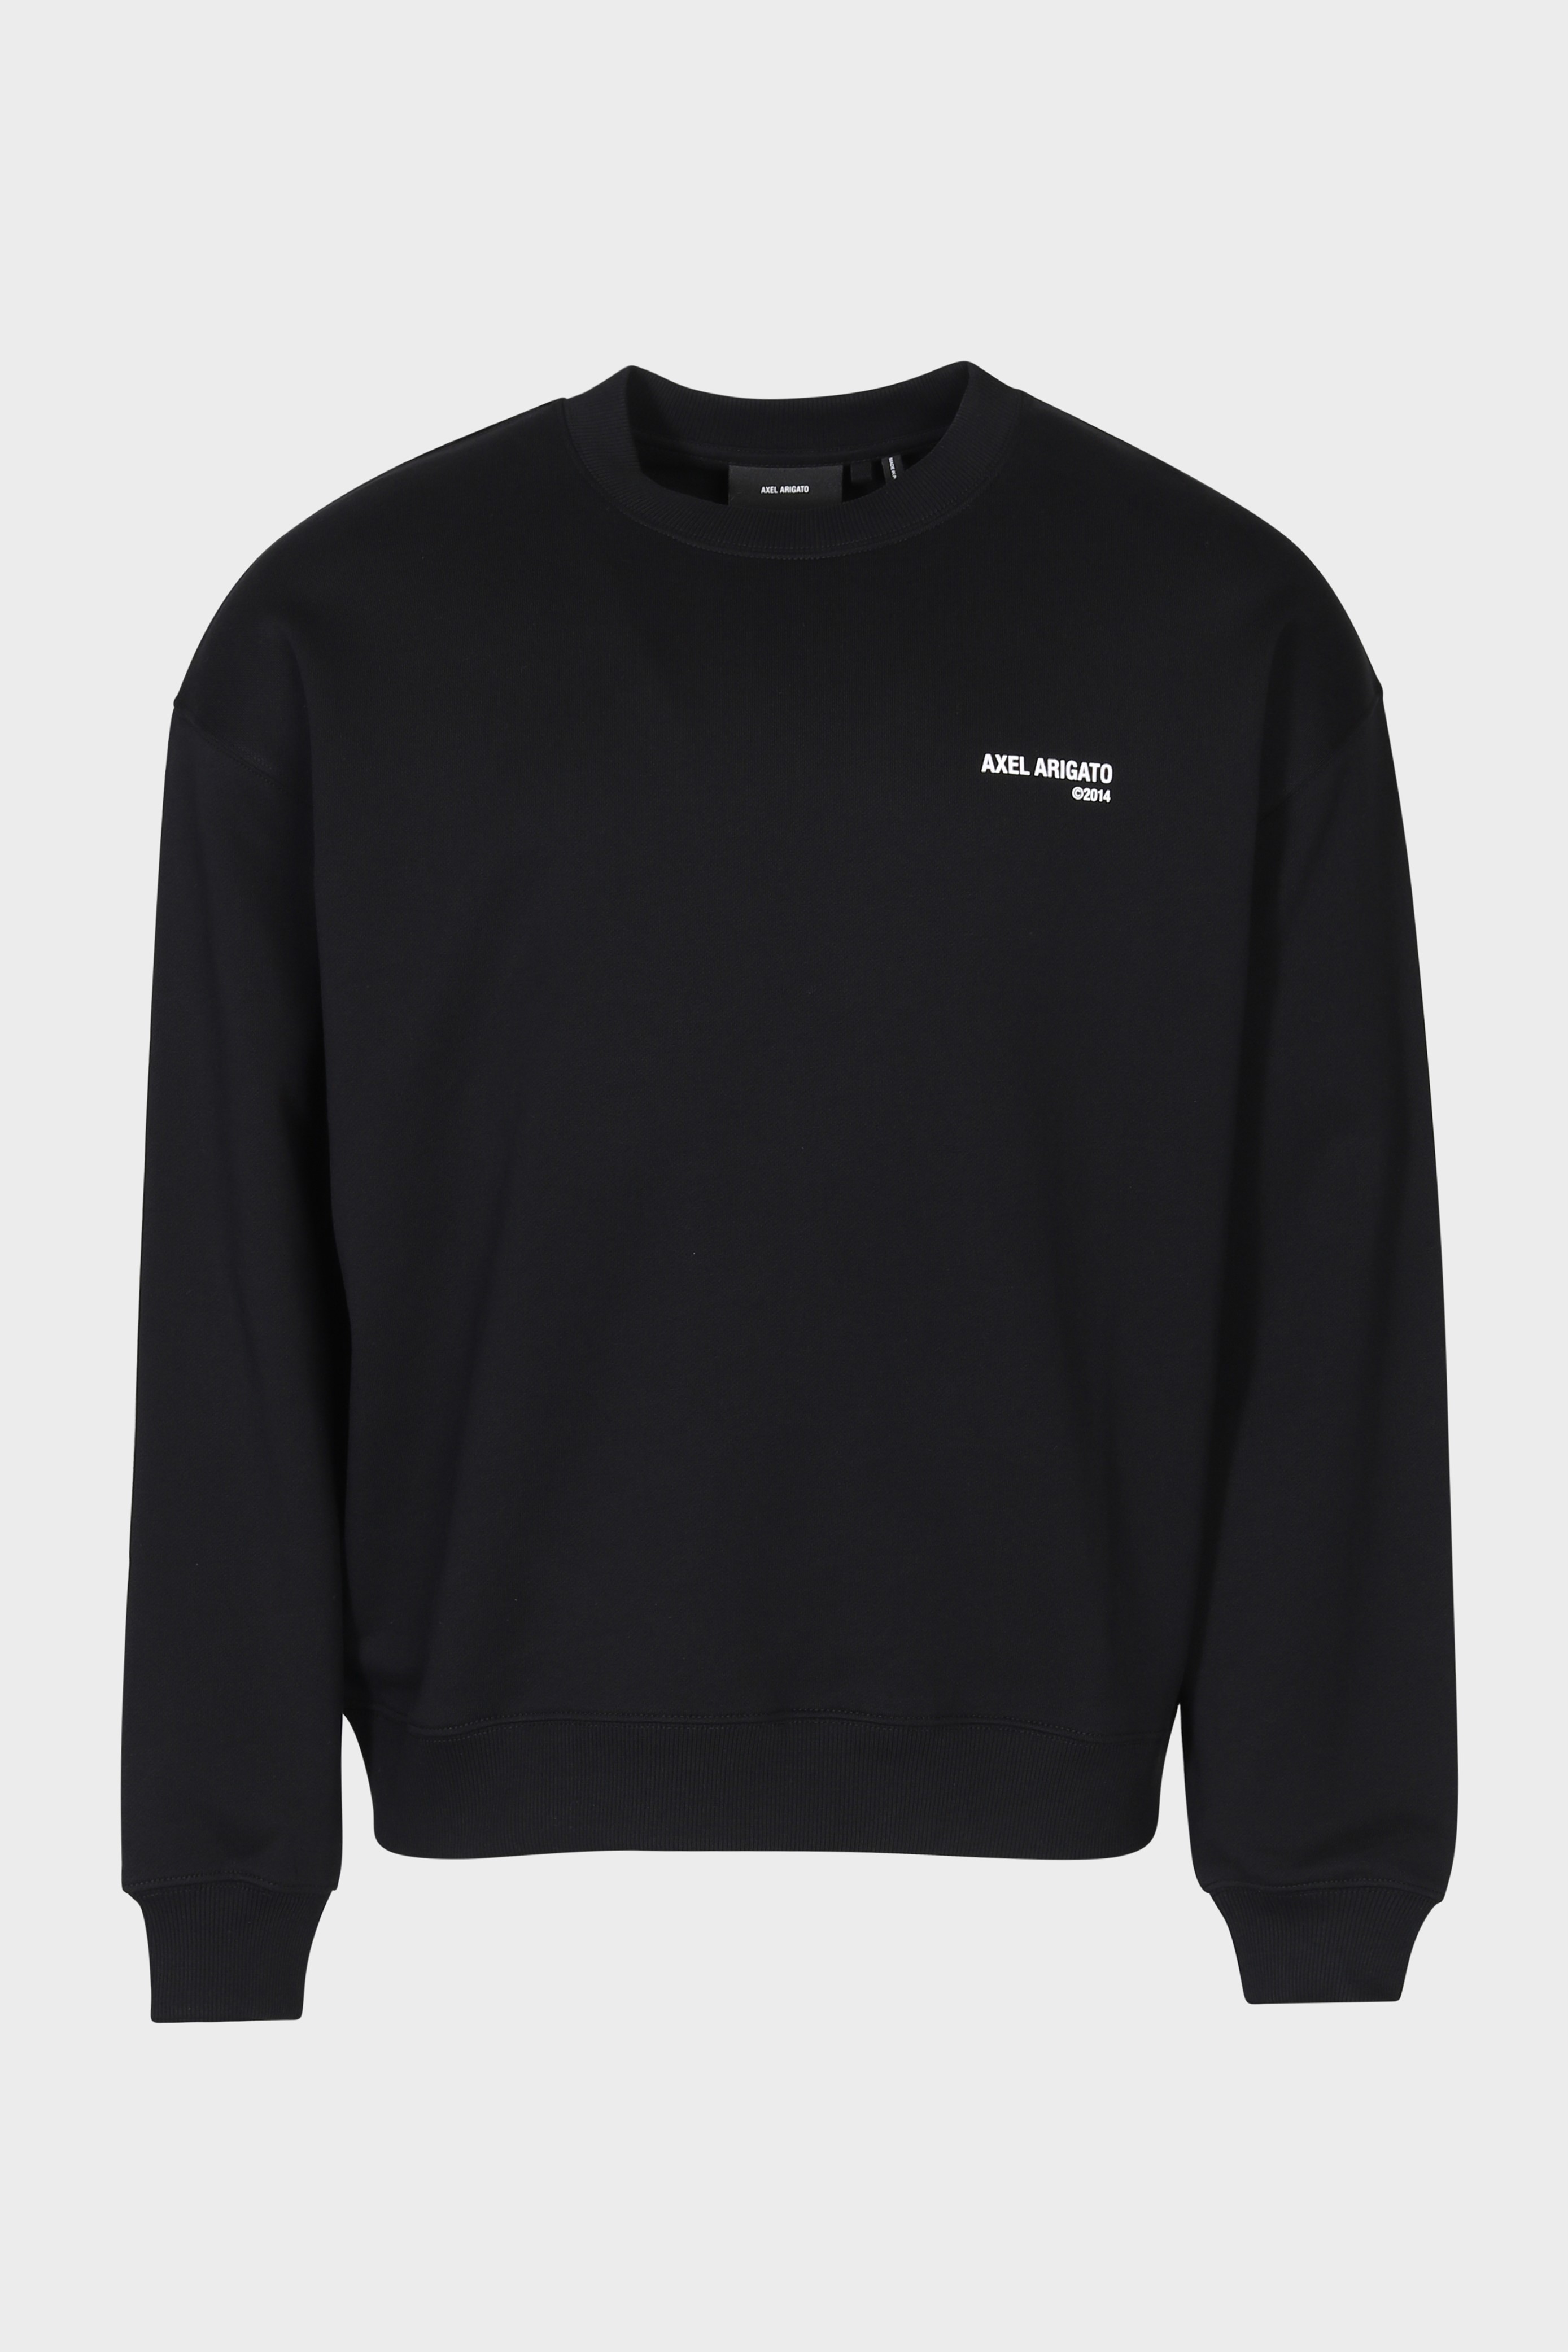 AXEL ARIGATO Spade Sweatshirt in Black M